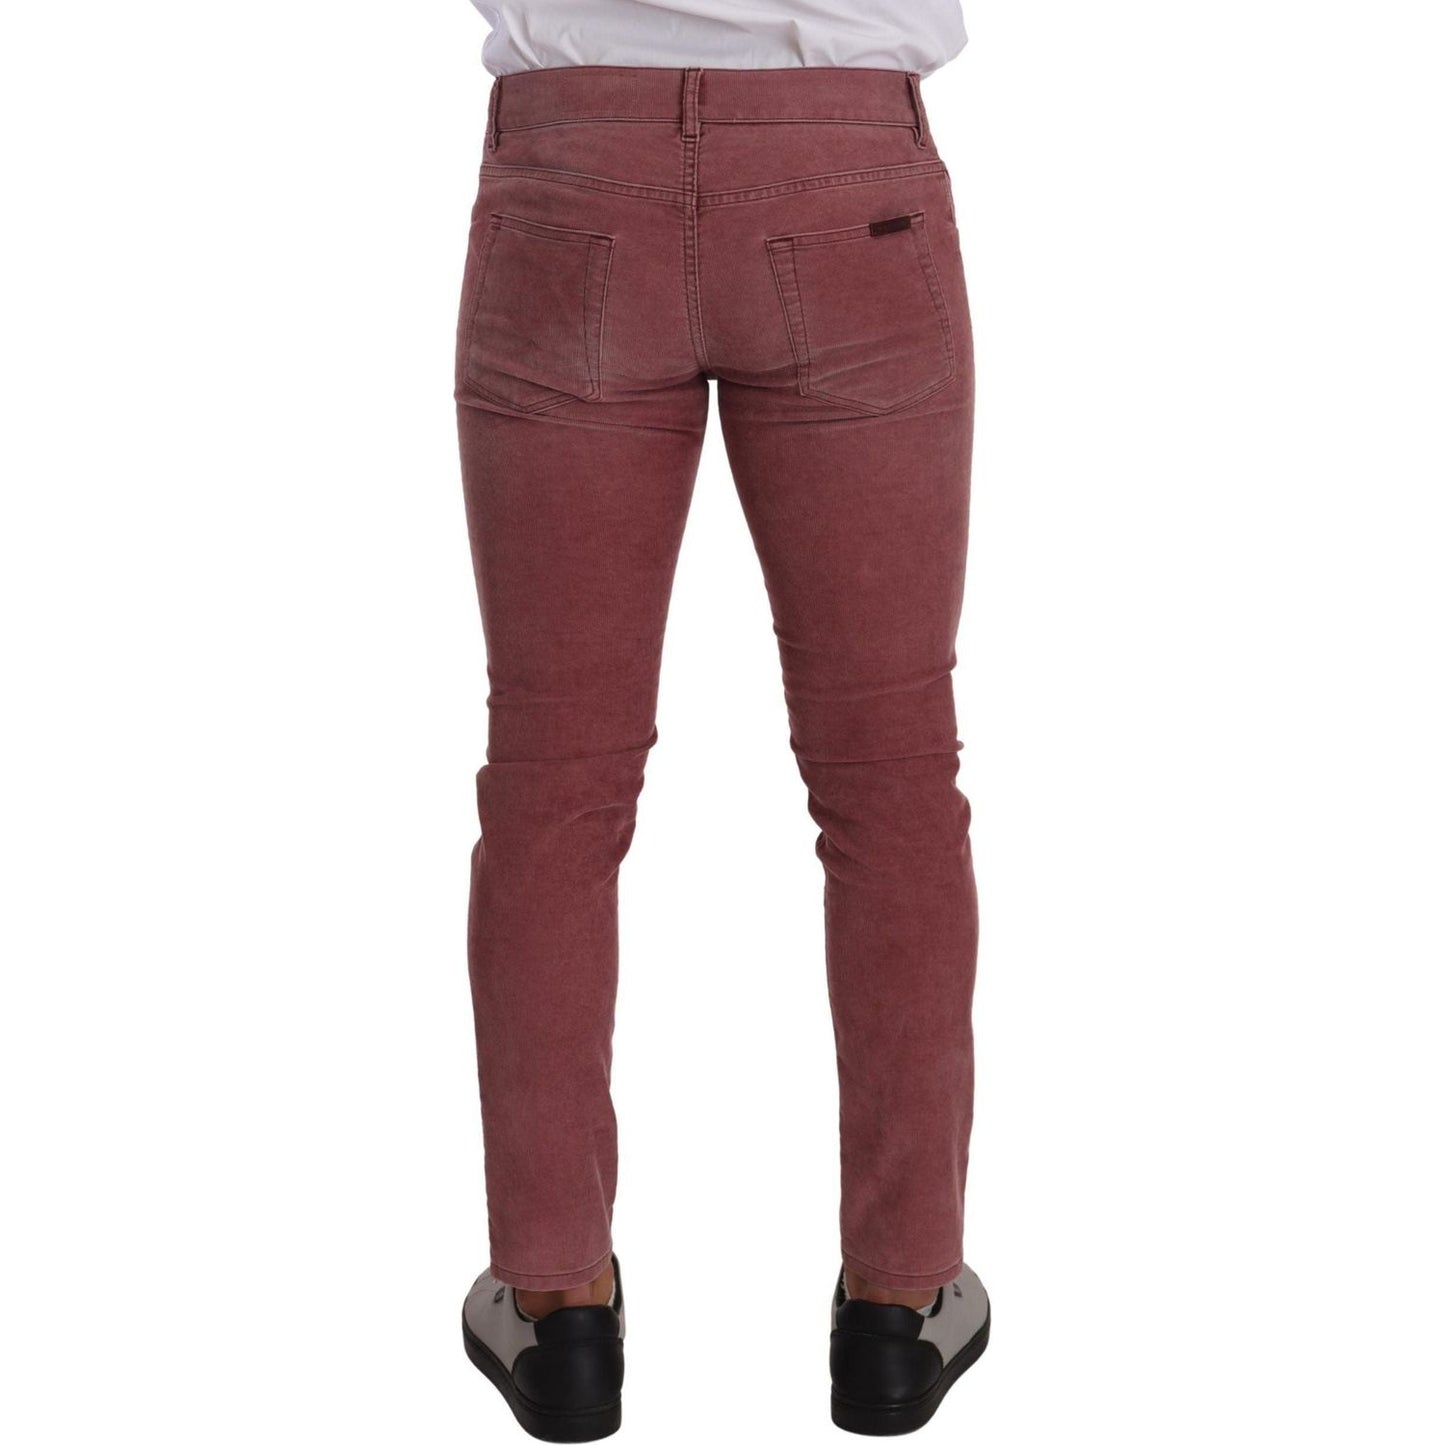 Dolce & Gabbana Elegant Slim Fit Corduroy Jeans pink-corduroy-cotton-skinny-men-denim-jeans IMG_1591-scaled-a55f3f82-637.jpg